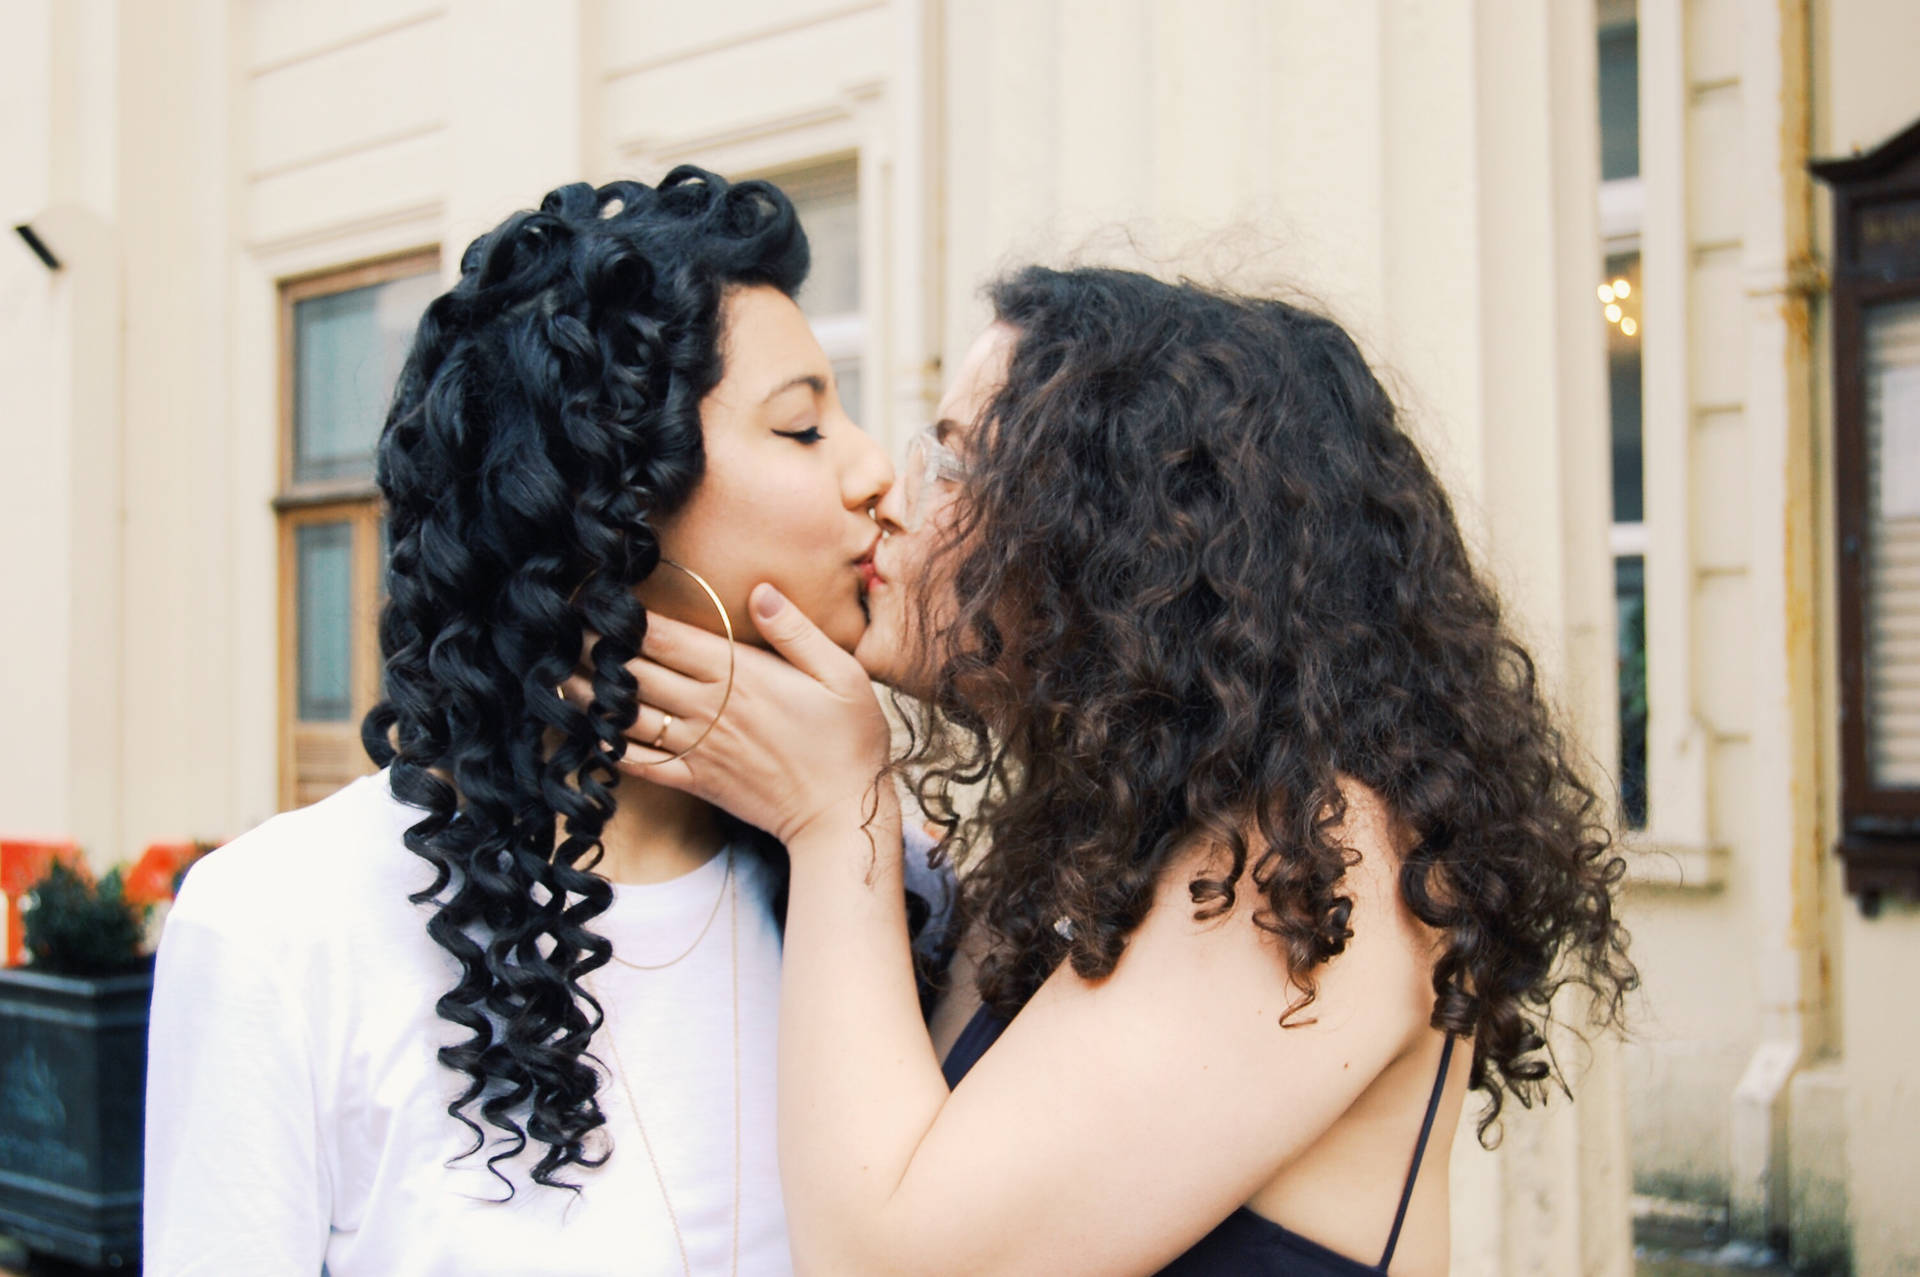 Lesbian Kissing In Street Background